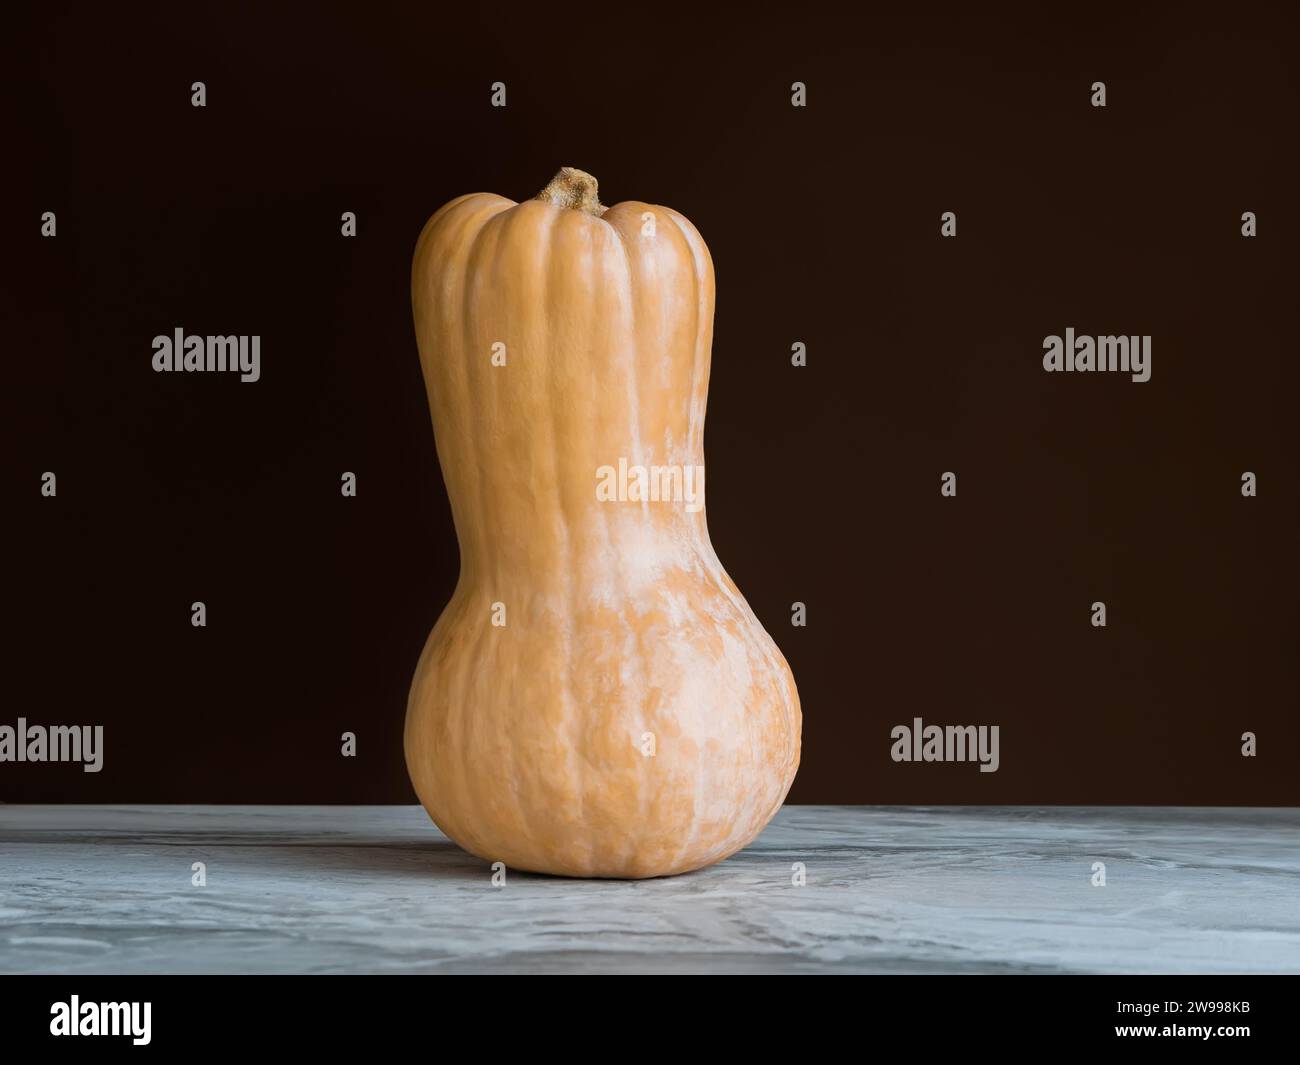 Standing upright on a marble countertop butternut squash (Cucurbita moschata), known as butternut pumpkin or gramma Stock Photo